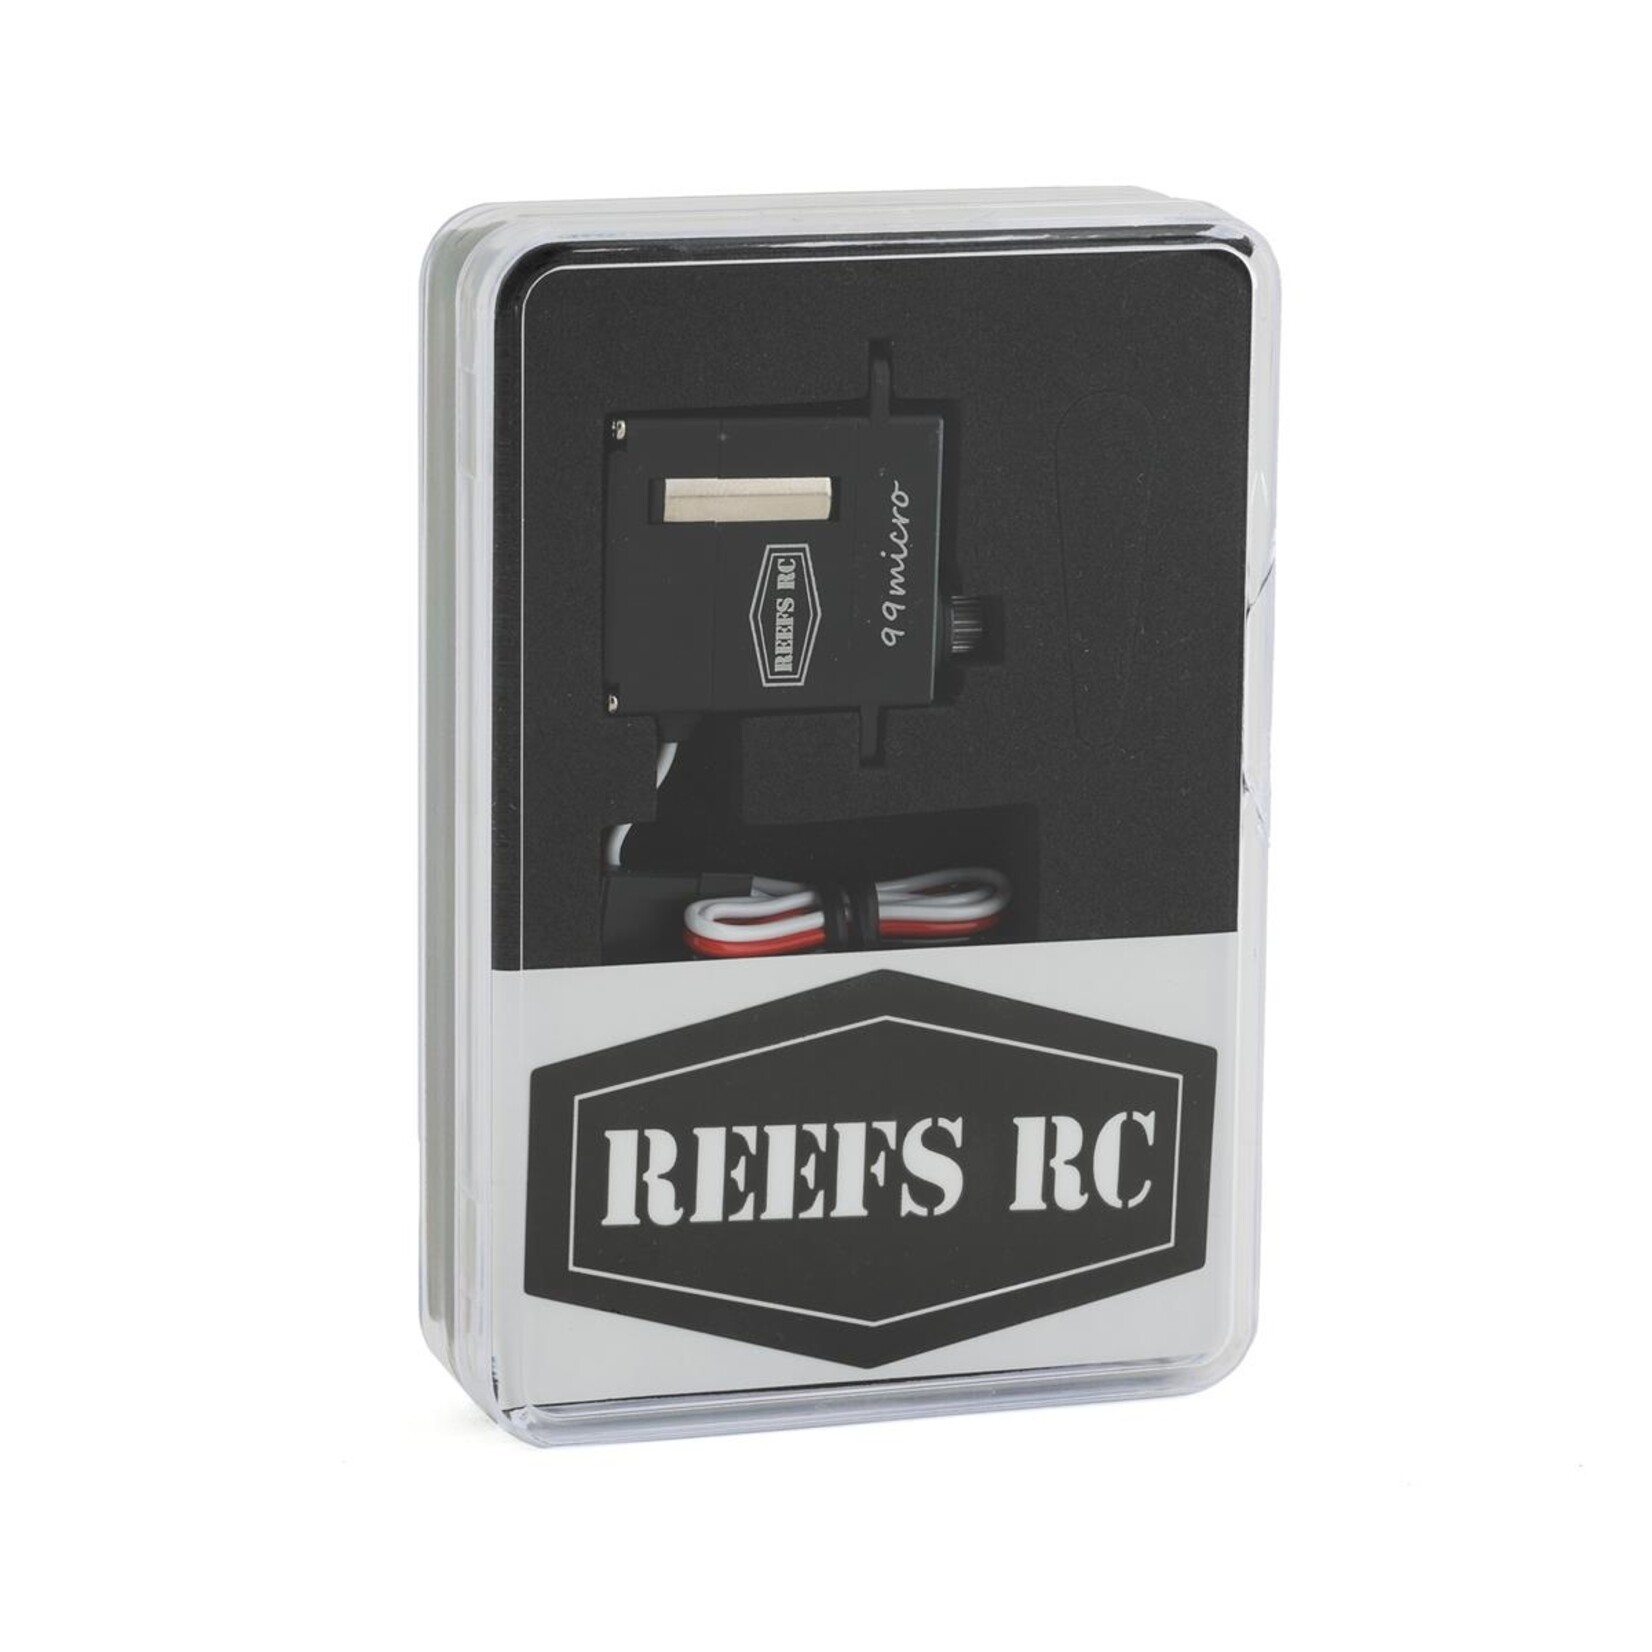 Reefs RC Reefs RC 99micro High Torque/Speed Metal Gear Digital Micro Servo (High Voltage) #REEFS25